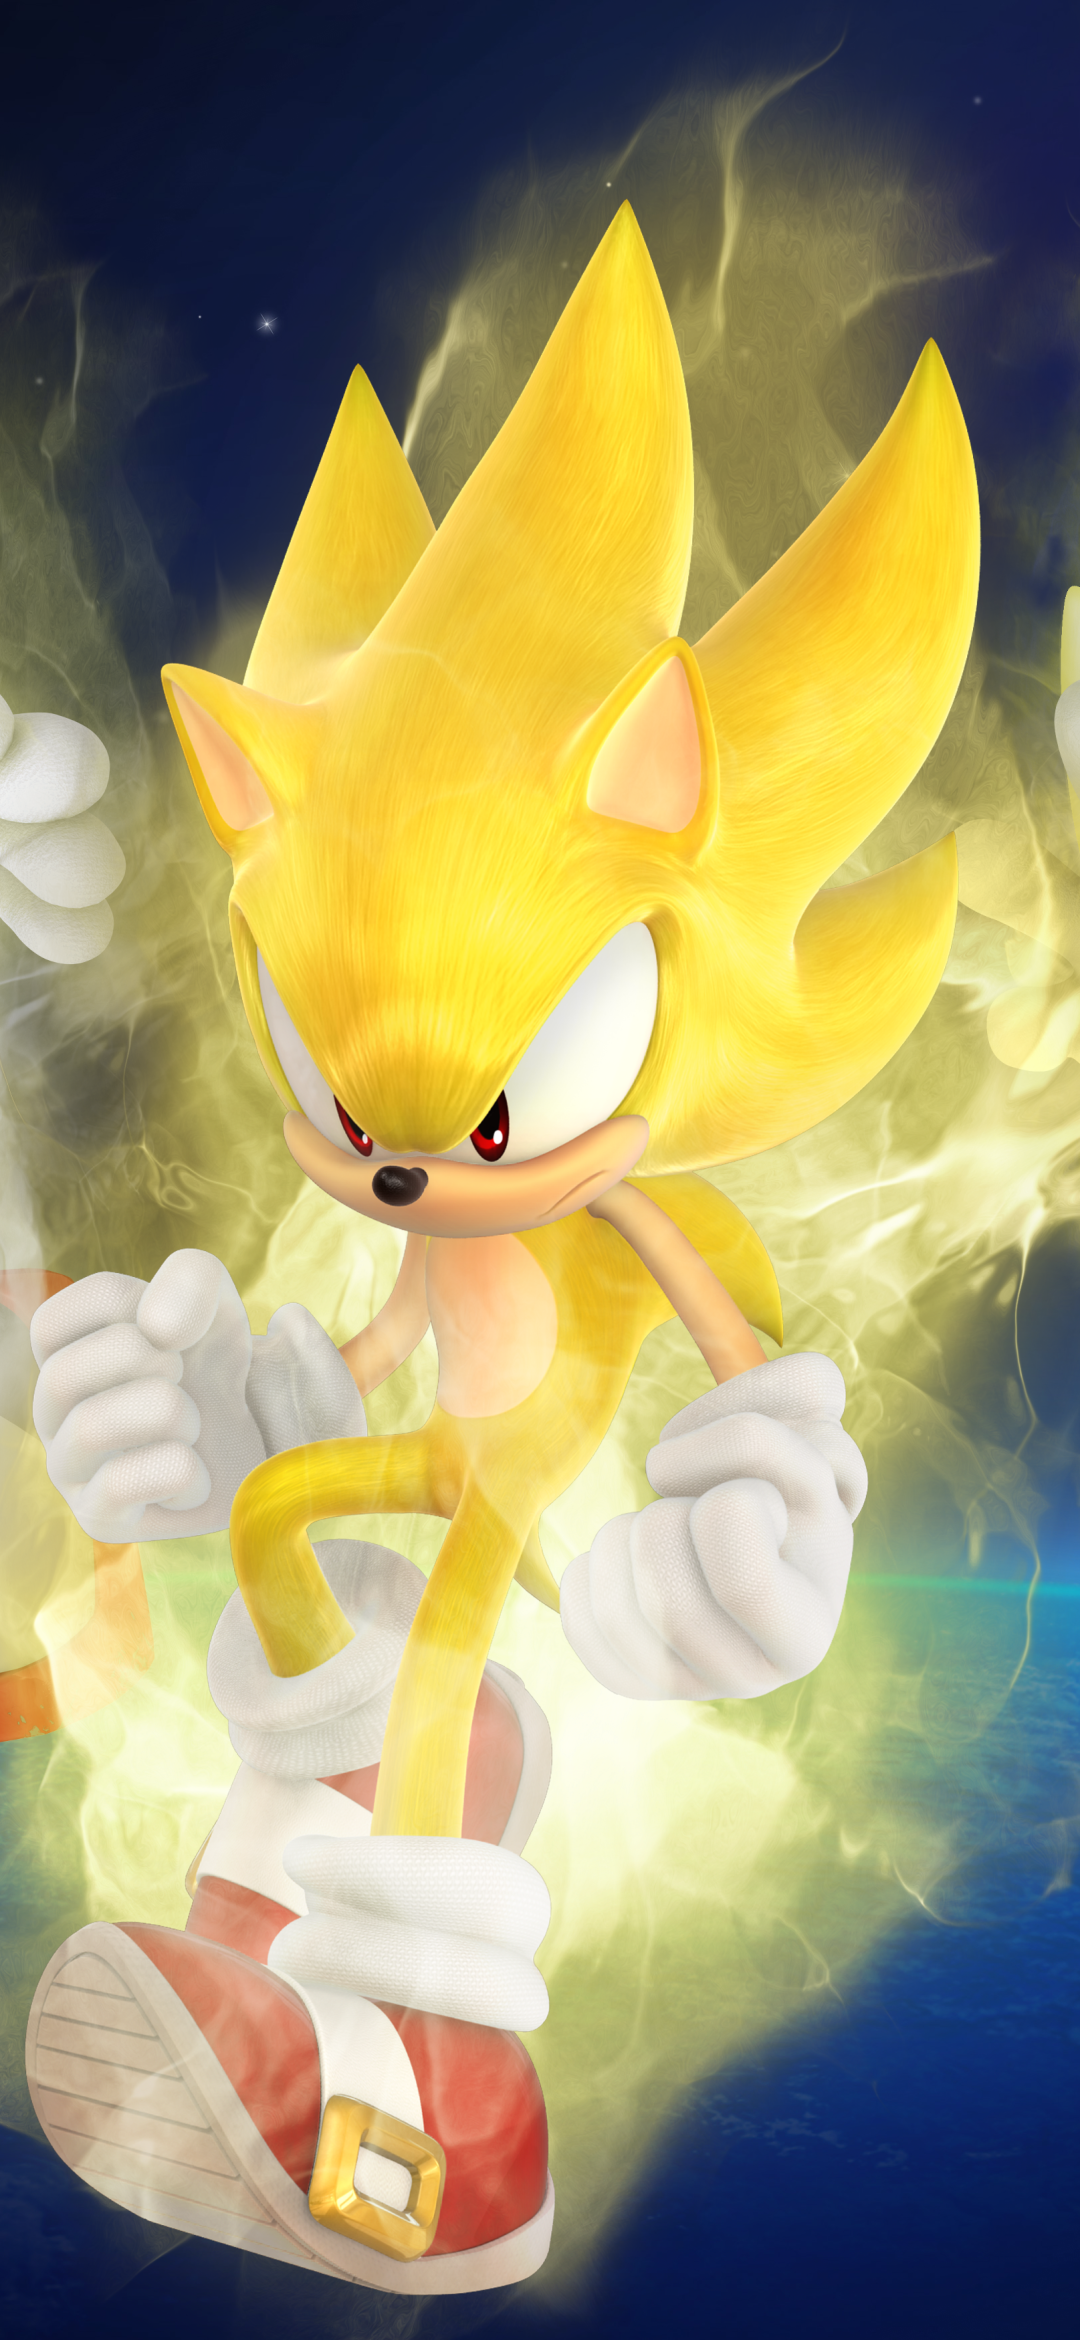 Sonic the Hedgehog (2006) Phone Wallpaper by SonikkuForever